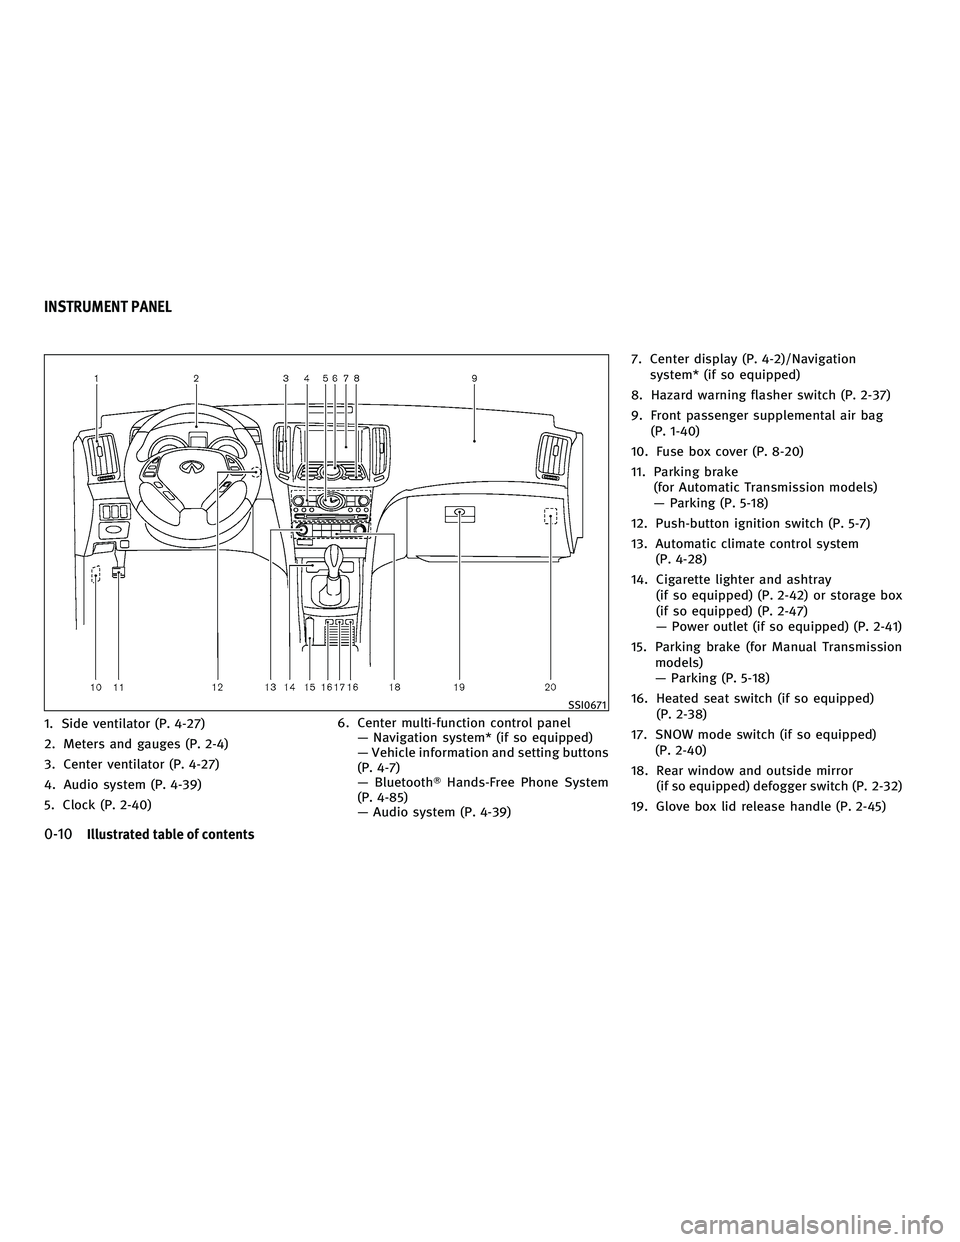 INFINITI G 2010  Owners Manual 1. Side ventilator (P. 4-27)
2. Meters and gauges (P. 2-4)
3. Center ventilator (P. 4-27)
4. Audio system (P. 4-39)
5. Clock (P. 2-40)6. Center multi-function control panel
— Navigation system* (if 